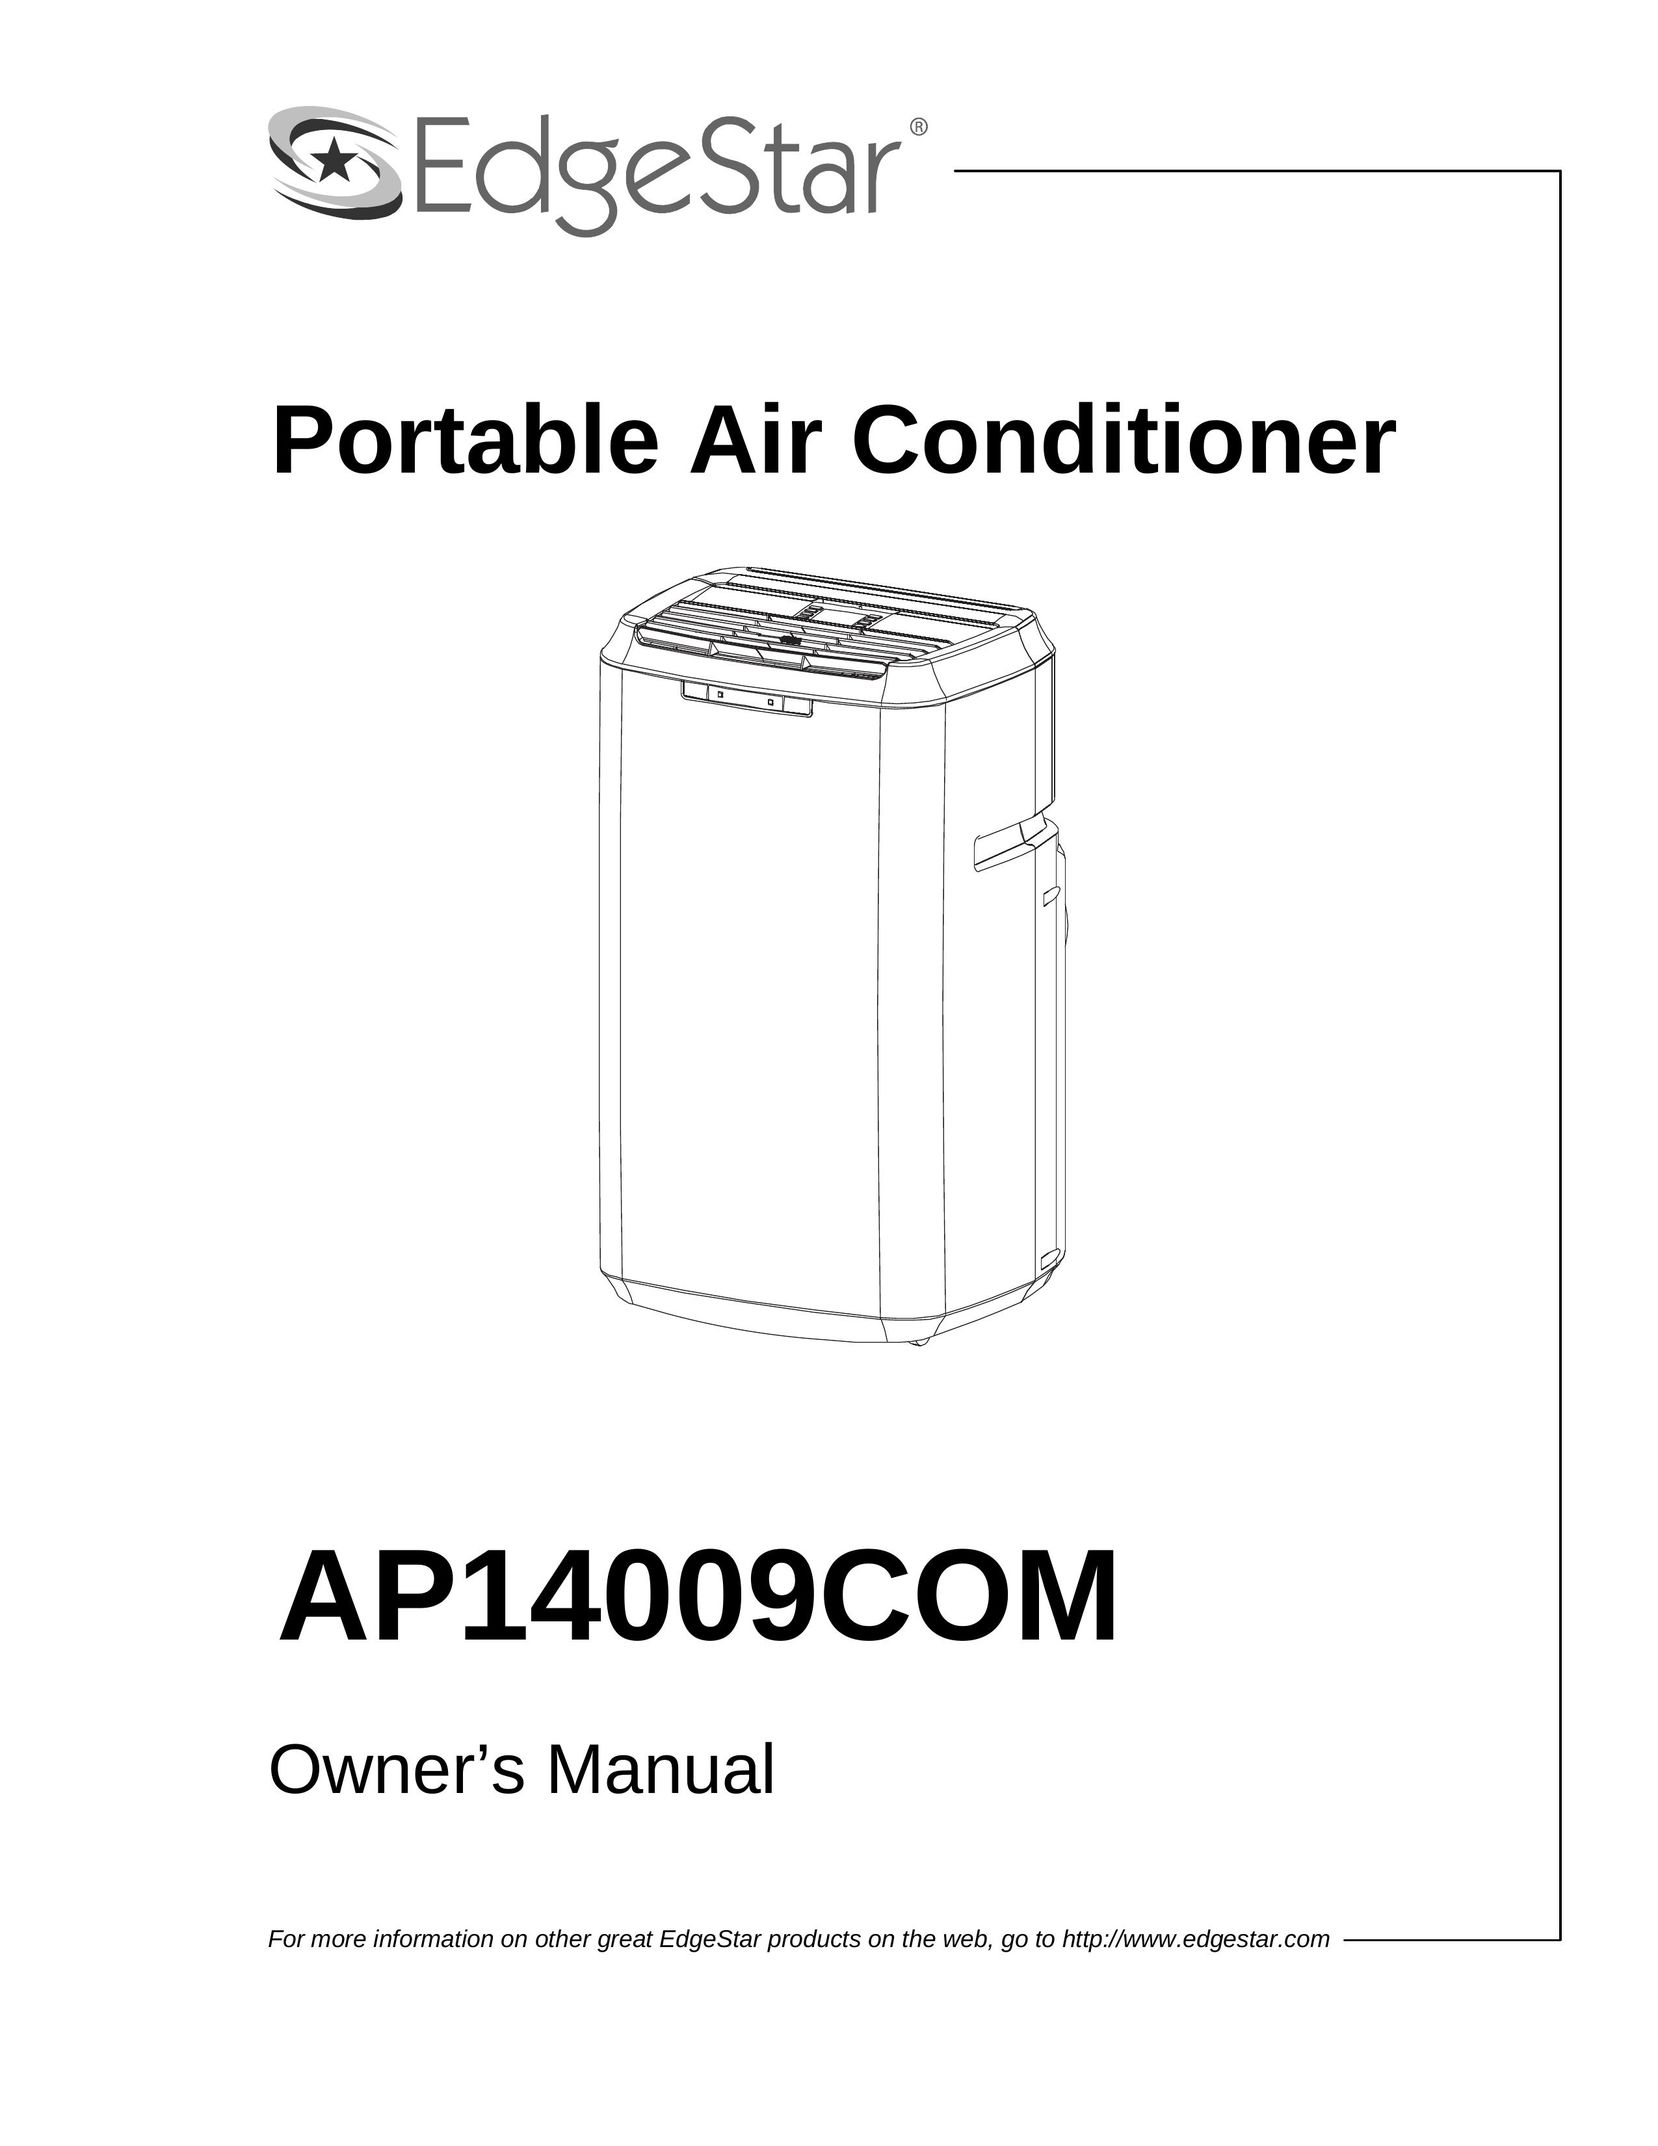 EdgeStar AP14009COM Air Conditioner User Manual